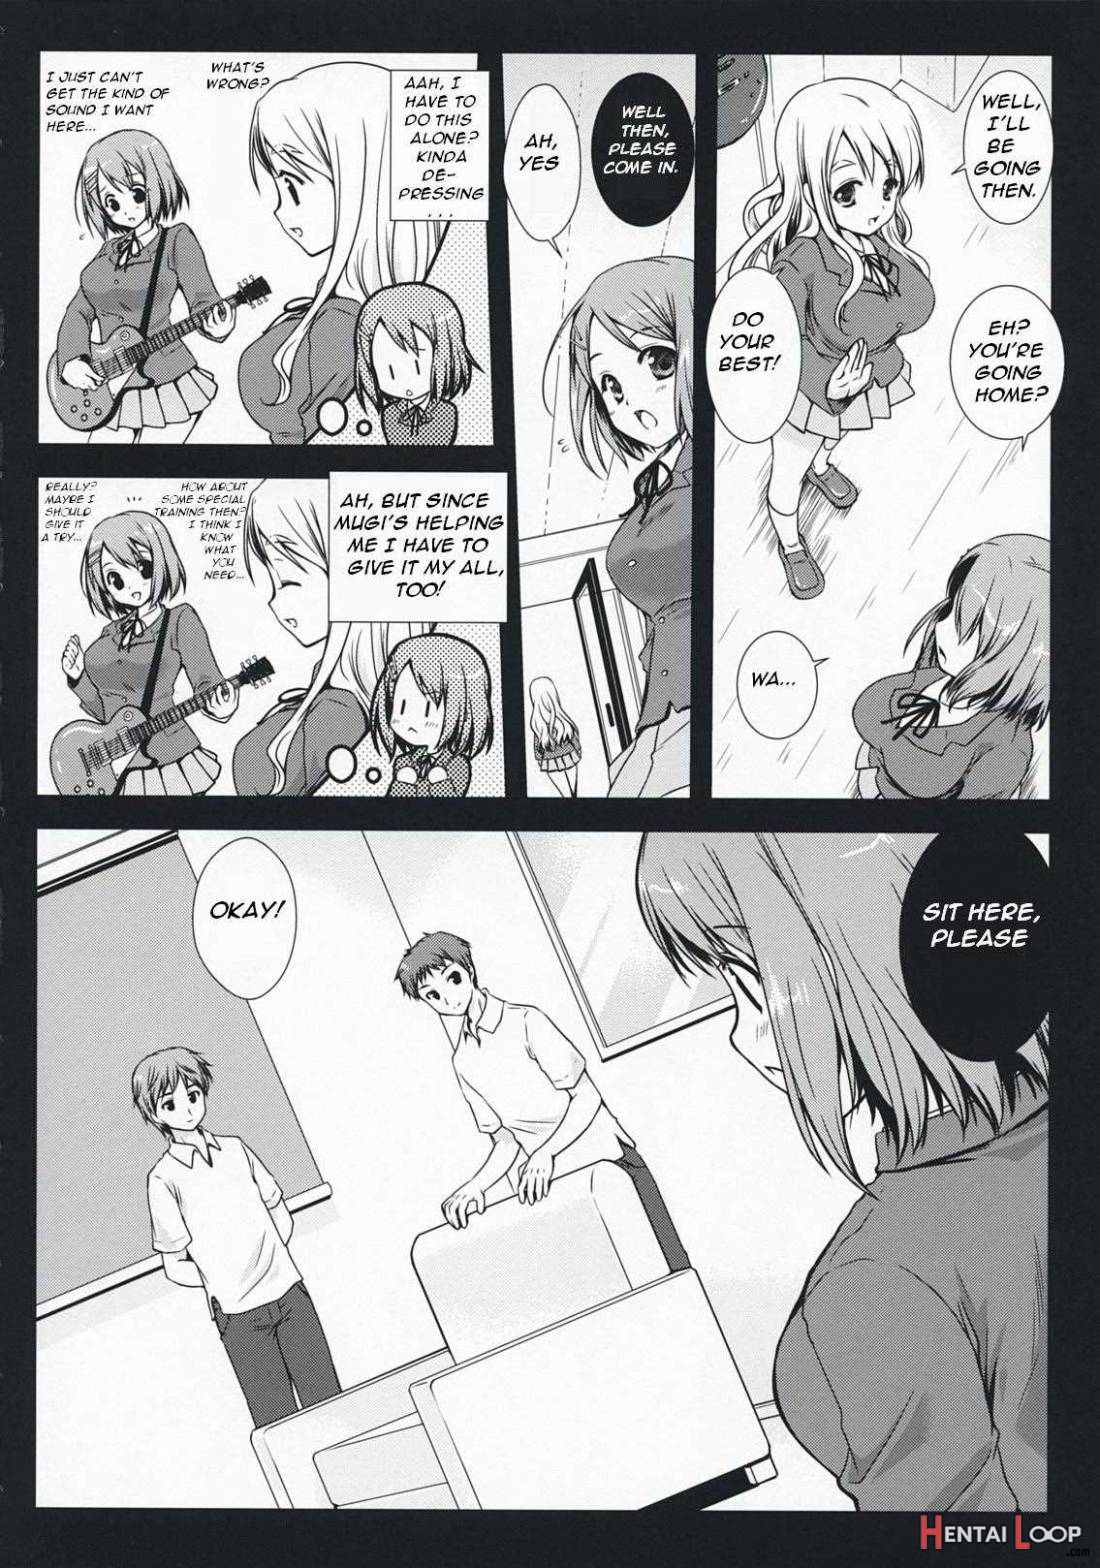 K-on no Tokkun! page 3